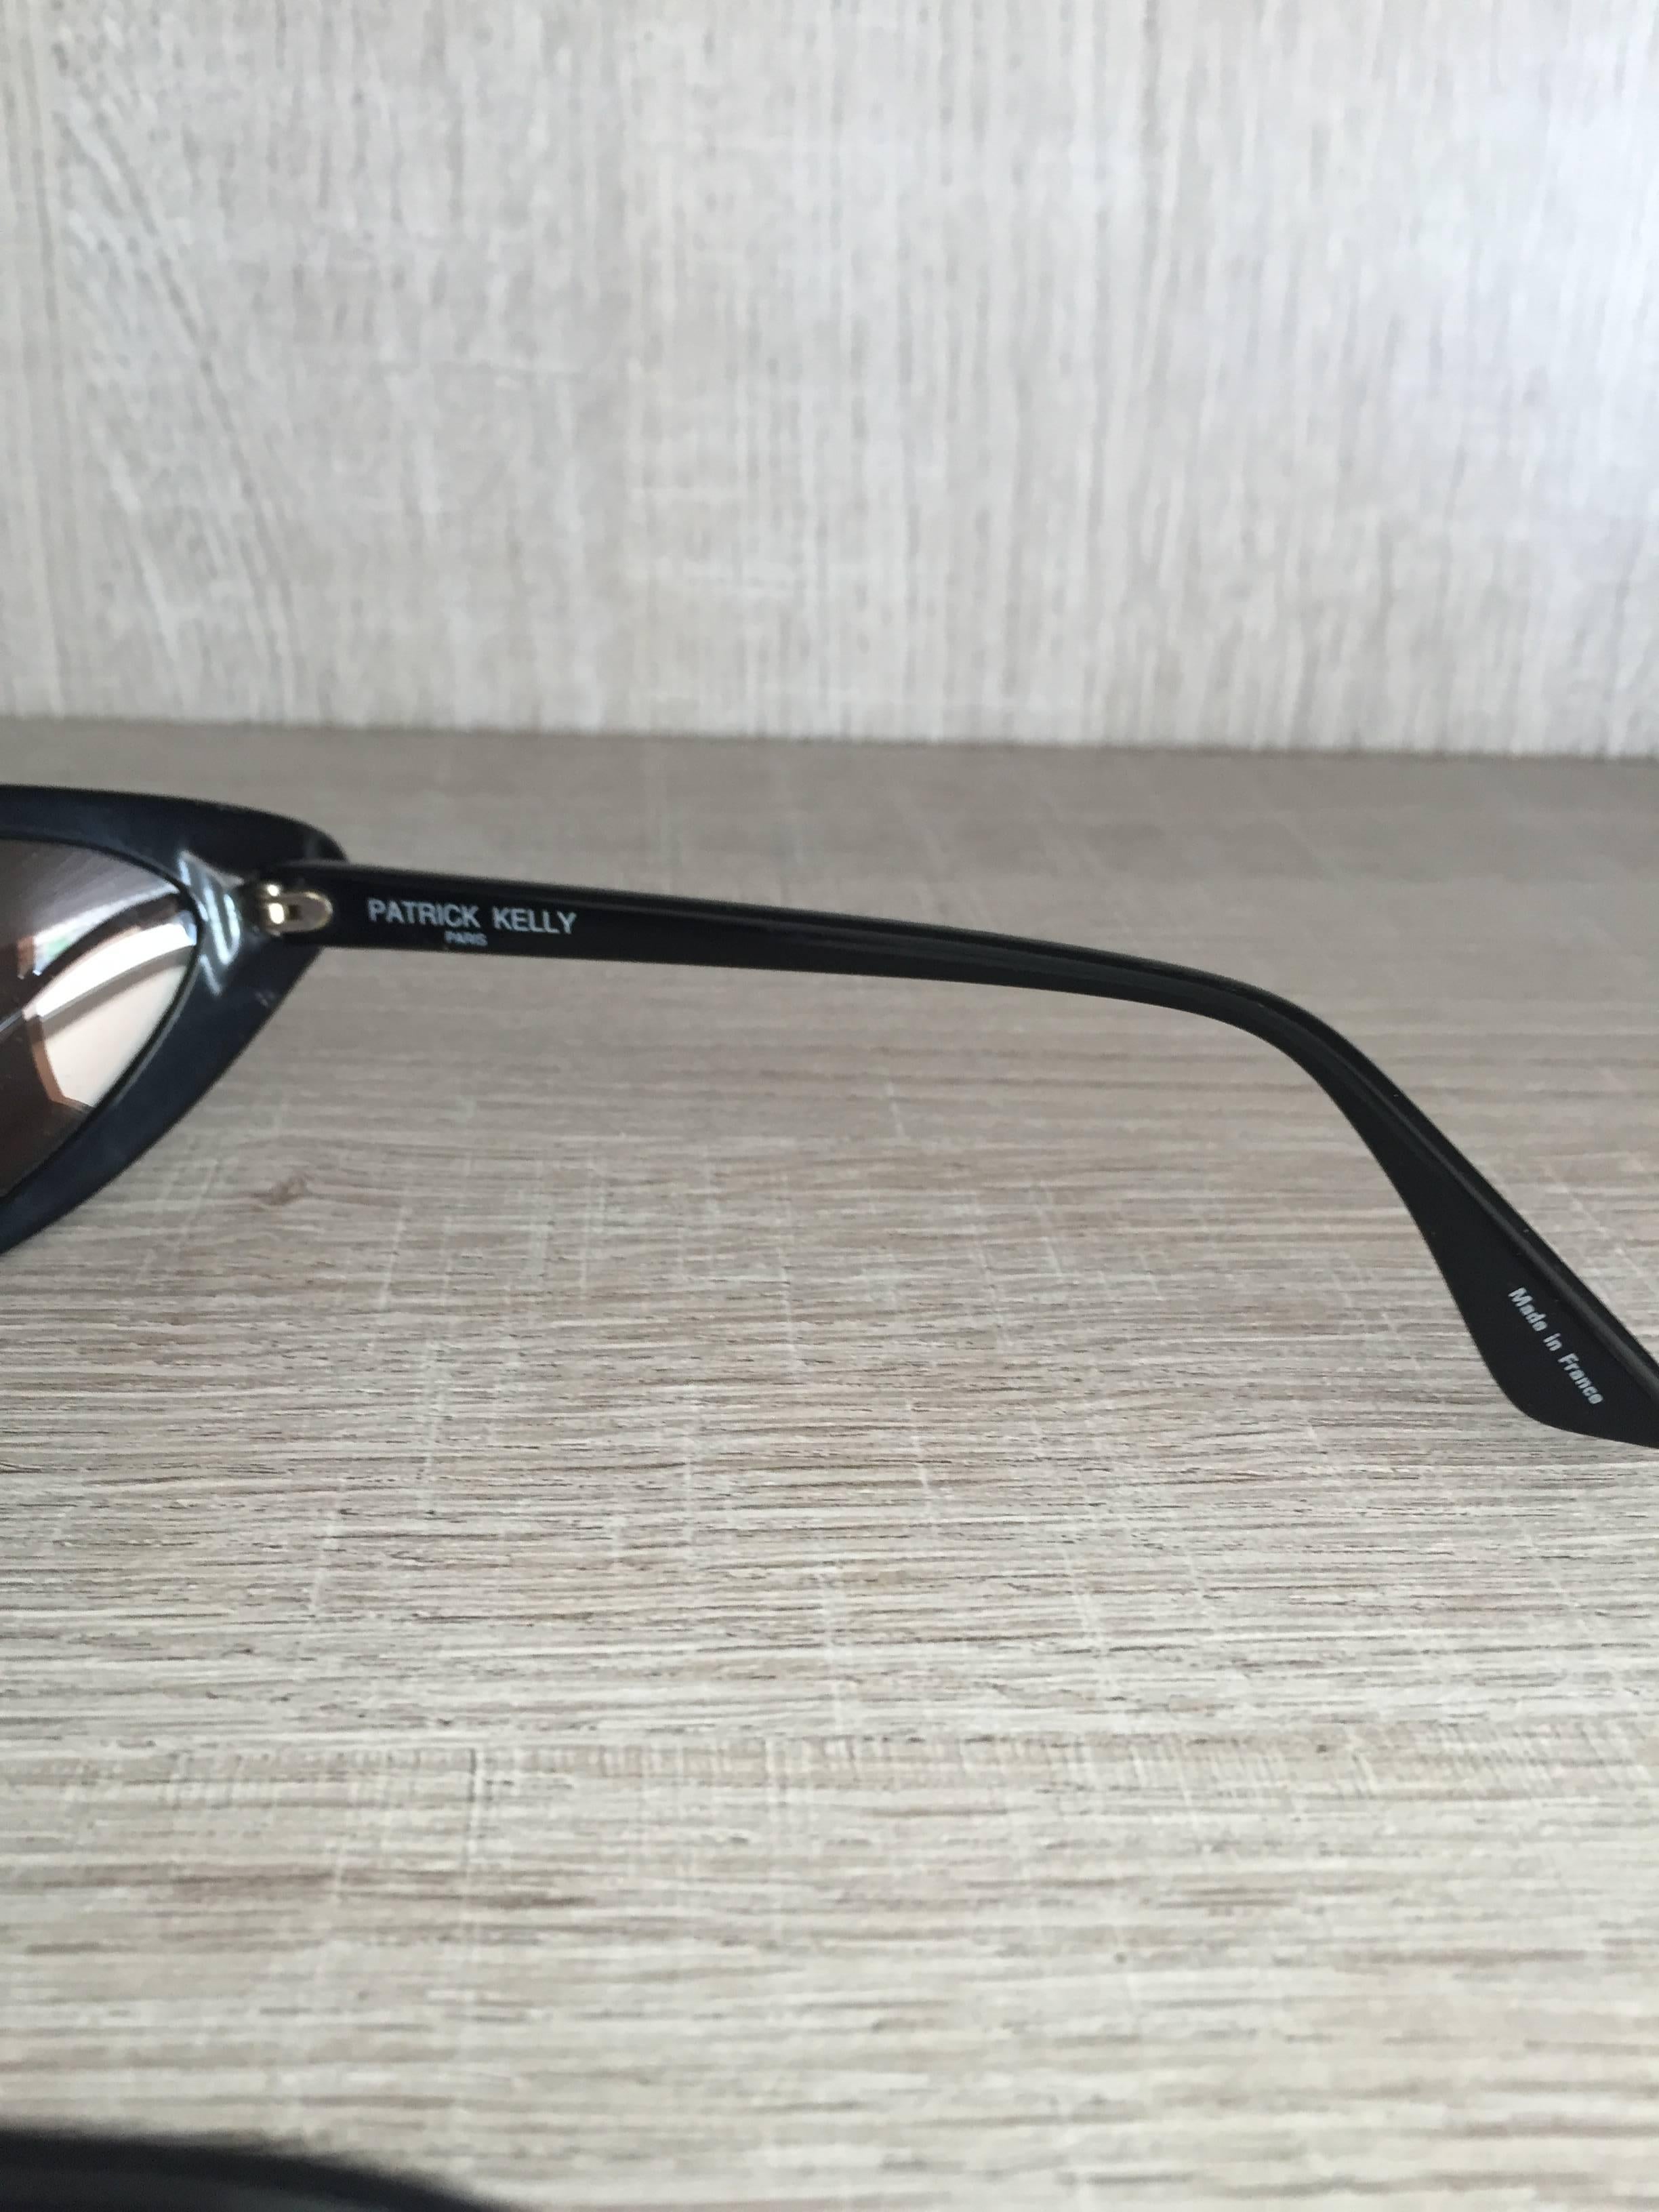 Patrick Kelly Amazing and Rare Vintage Cat Eye Sunglasses Glasses w/ Studs 1